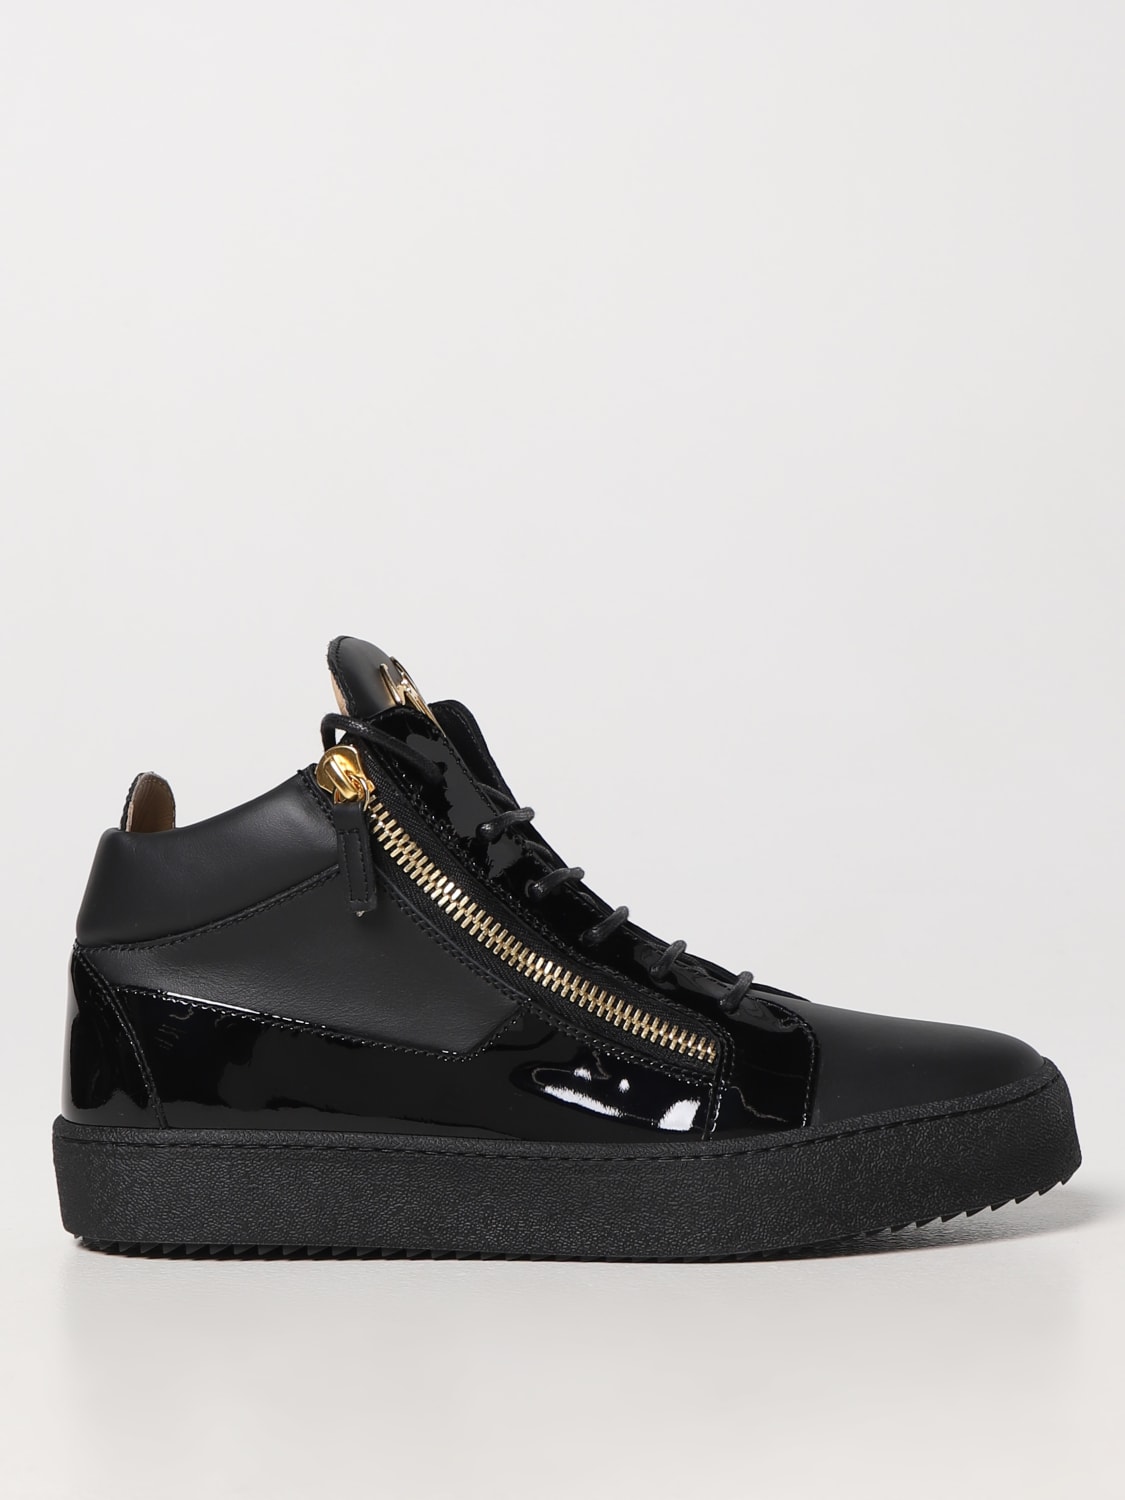 GIUSEPPE ZANOTTI: sneakers man Black | Giuseppe Zanotti sneakers RU00011 online on GIGLIO.COM